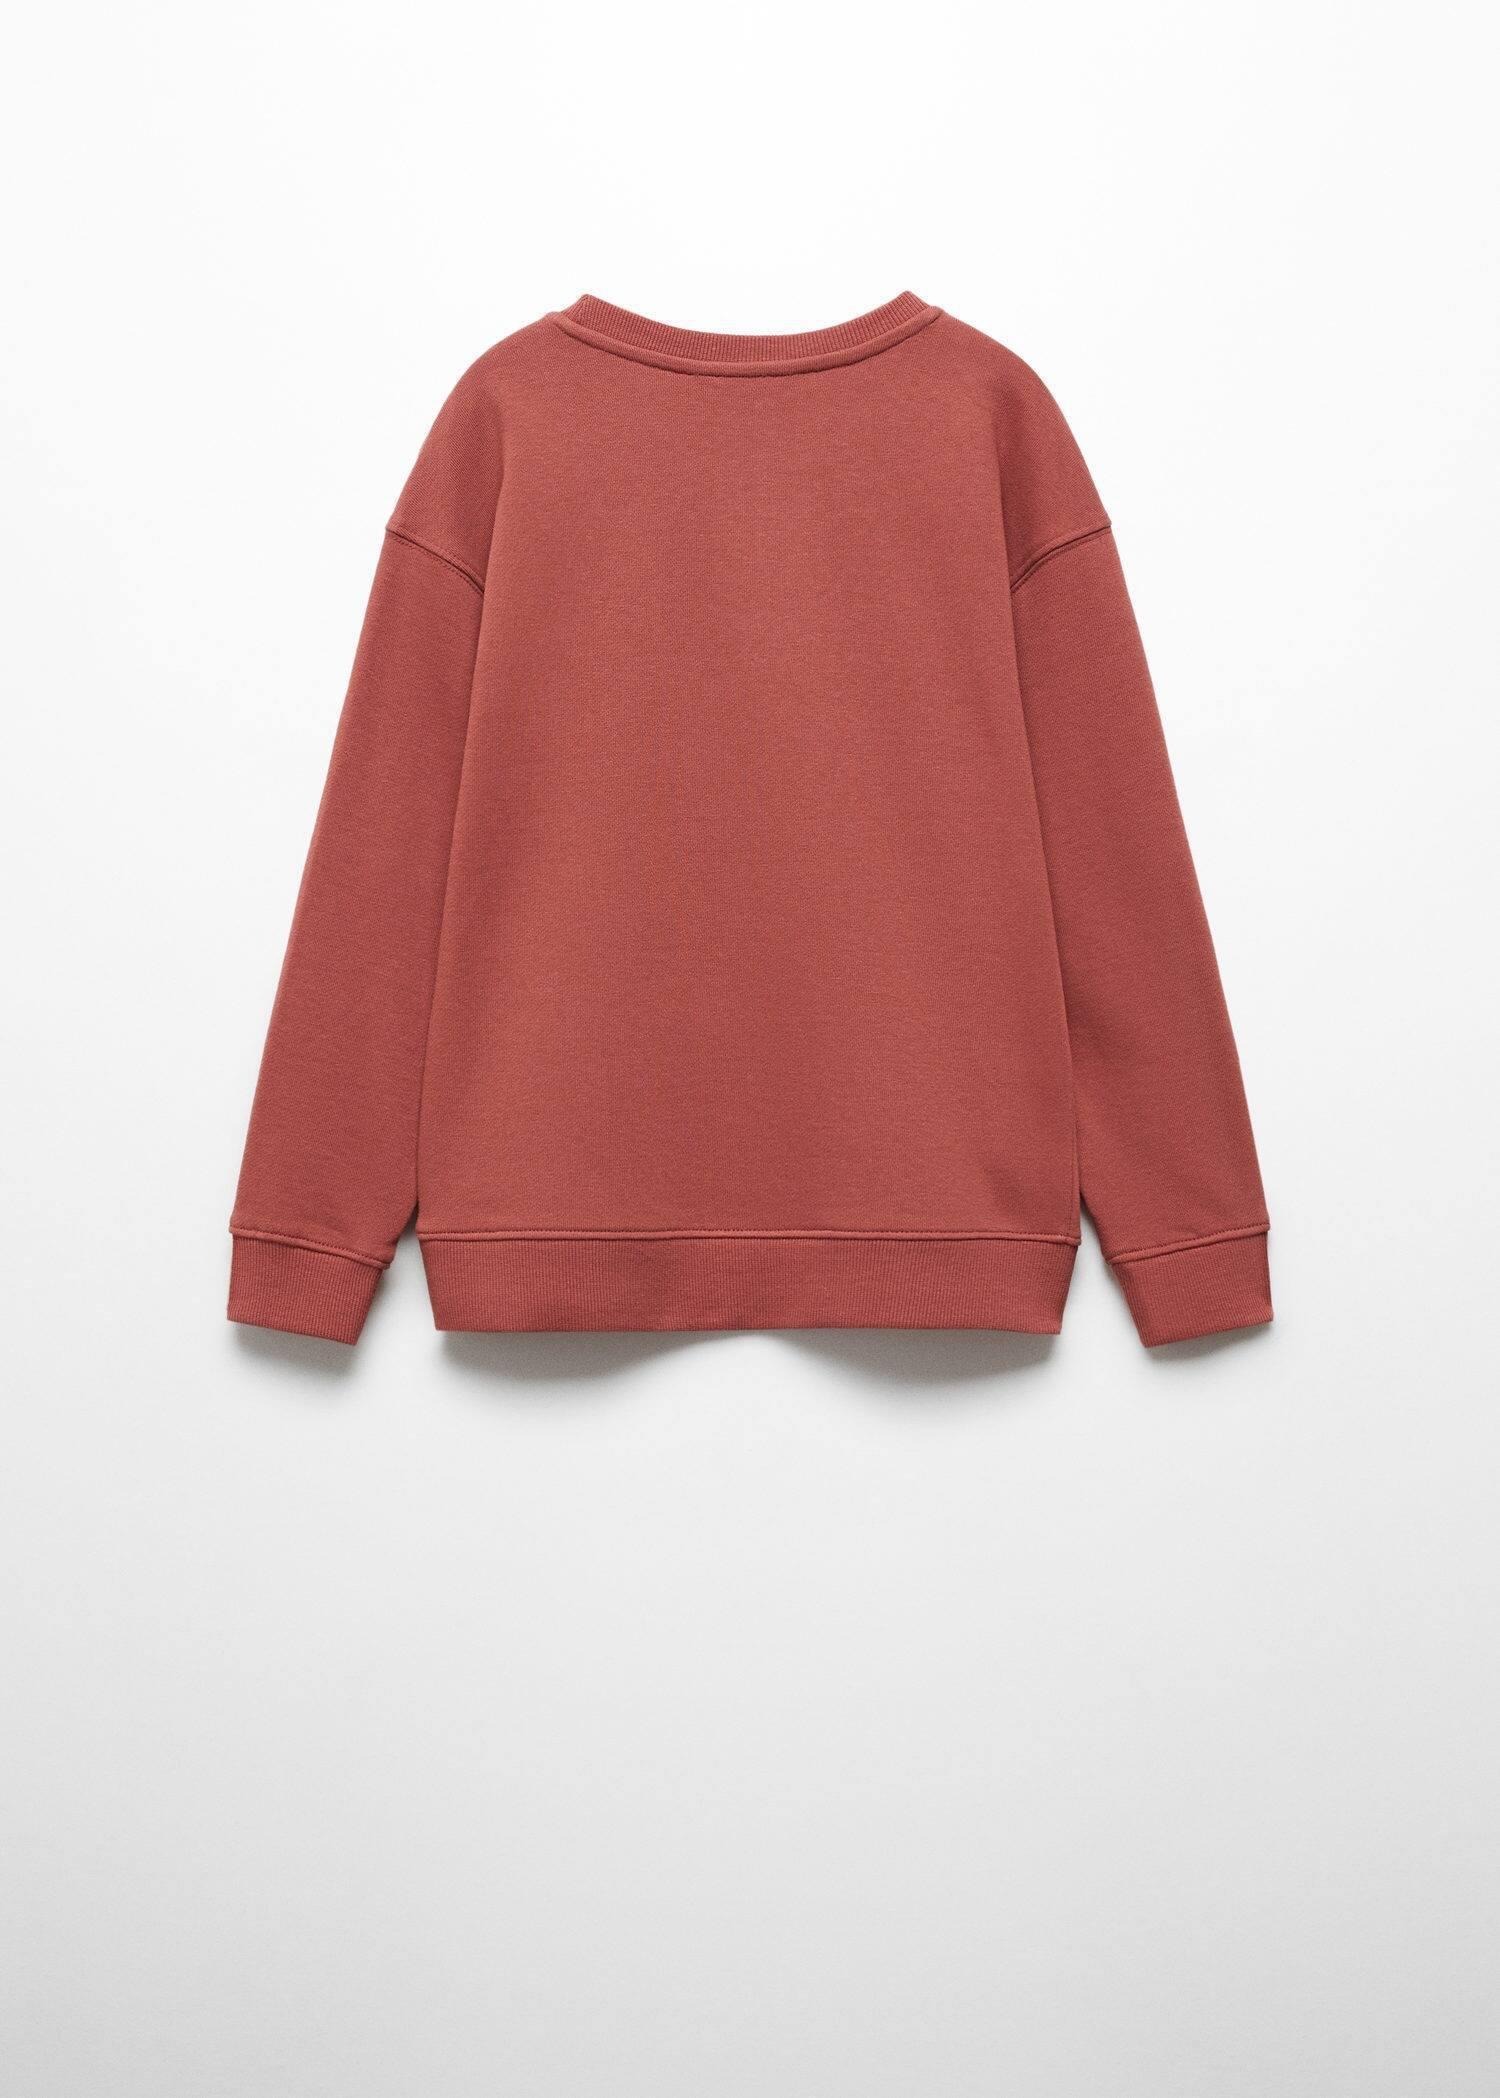 Mango - Red Message Cotton Sweatshirt, Kids Boys